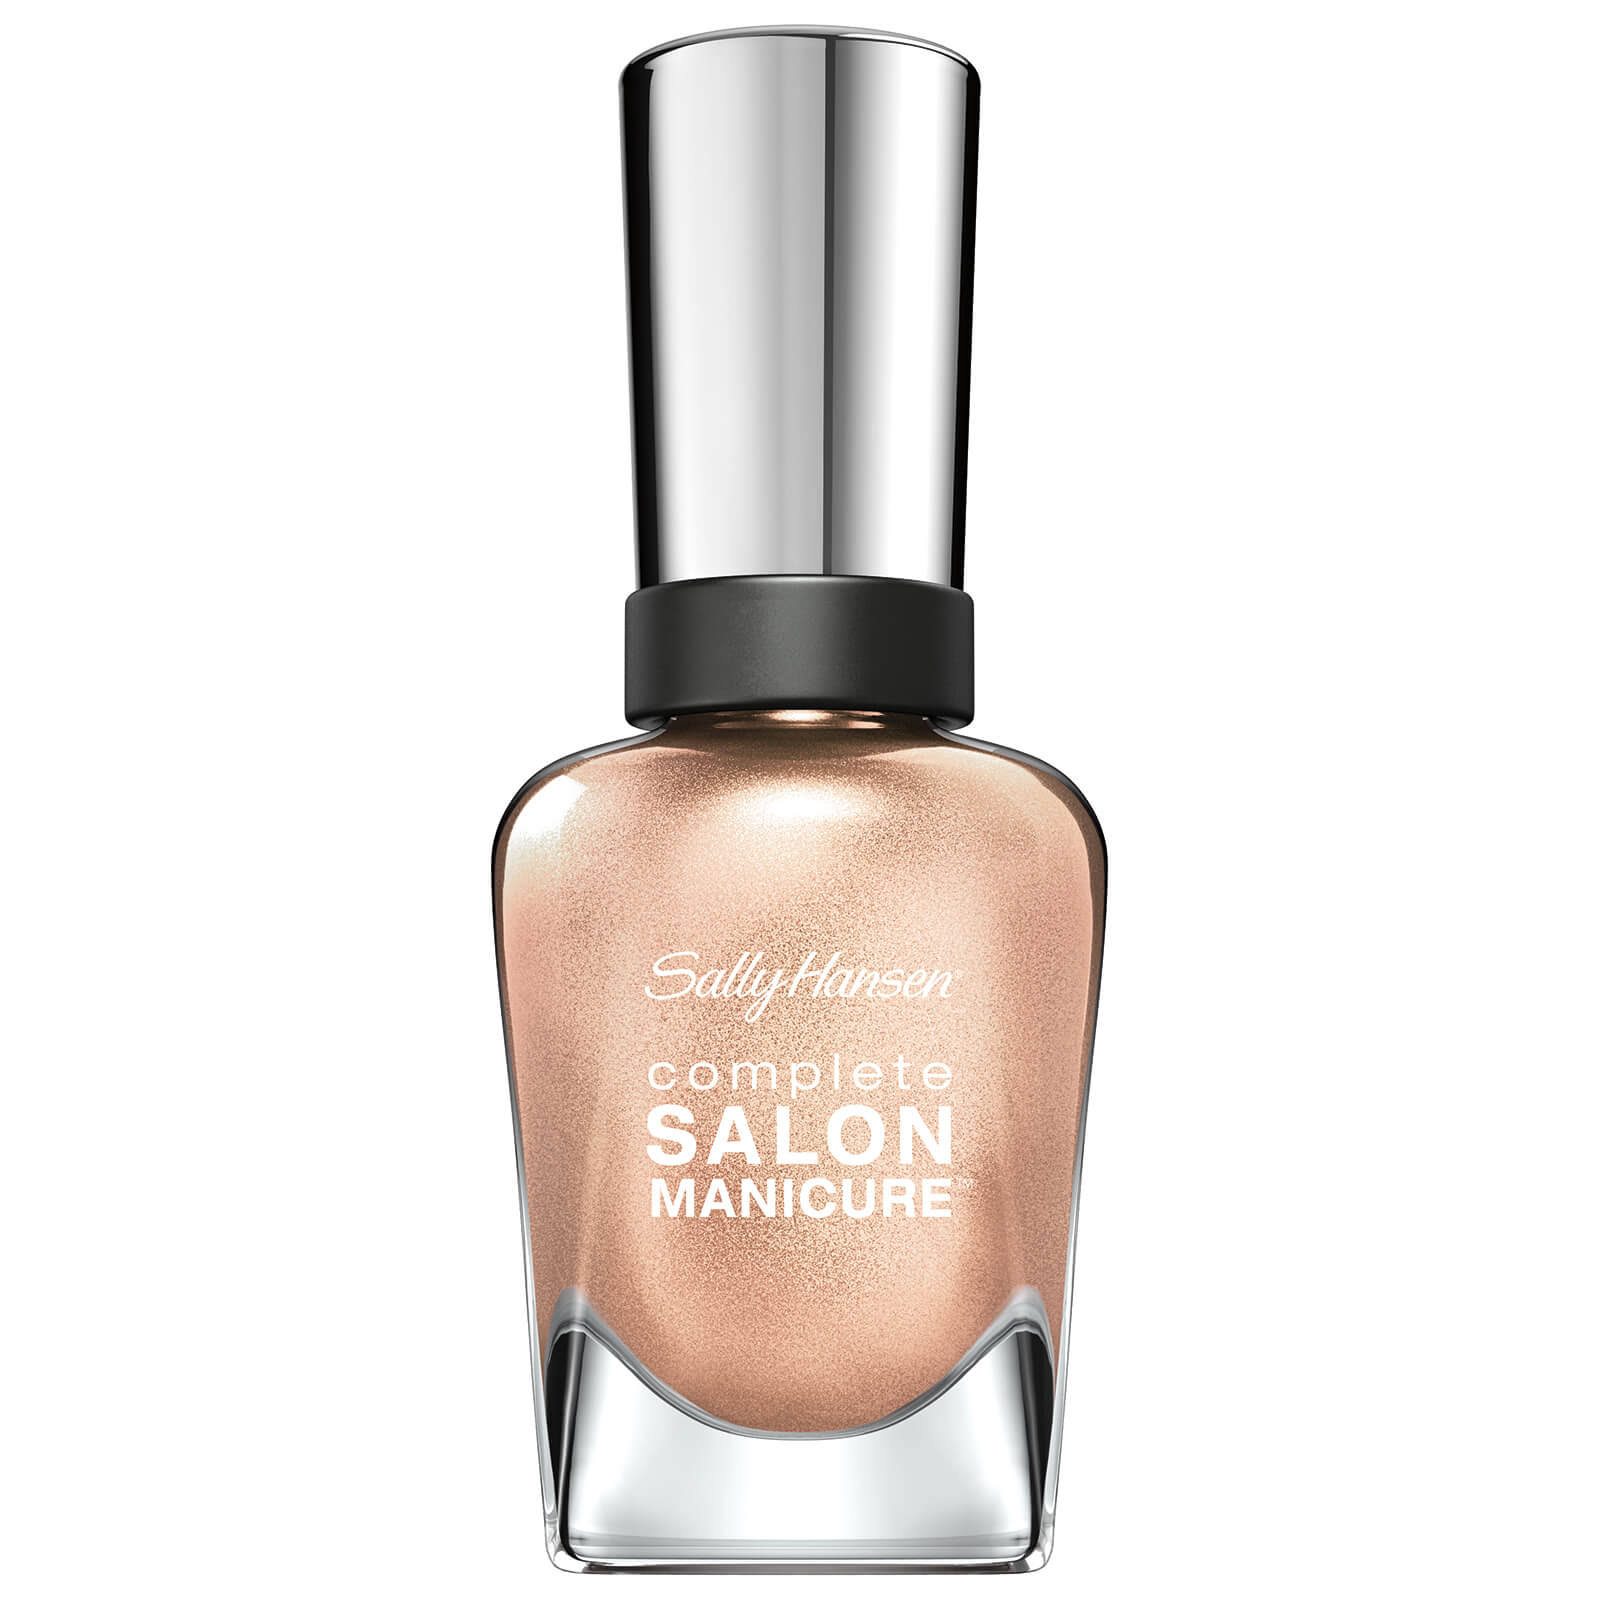 Sally Hansen Complete Salon Manicure Nail Polish - 216 You Glow Girl!, 14.7ml